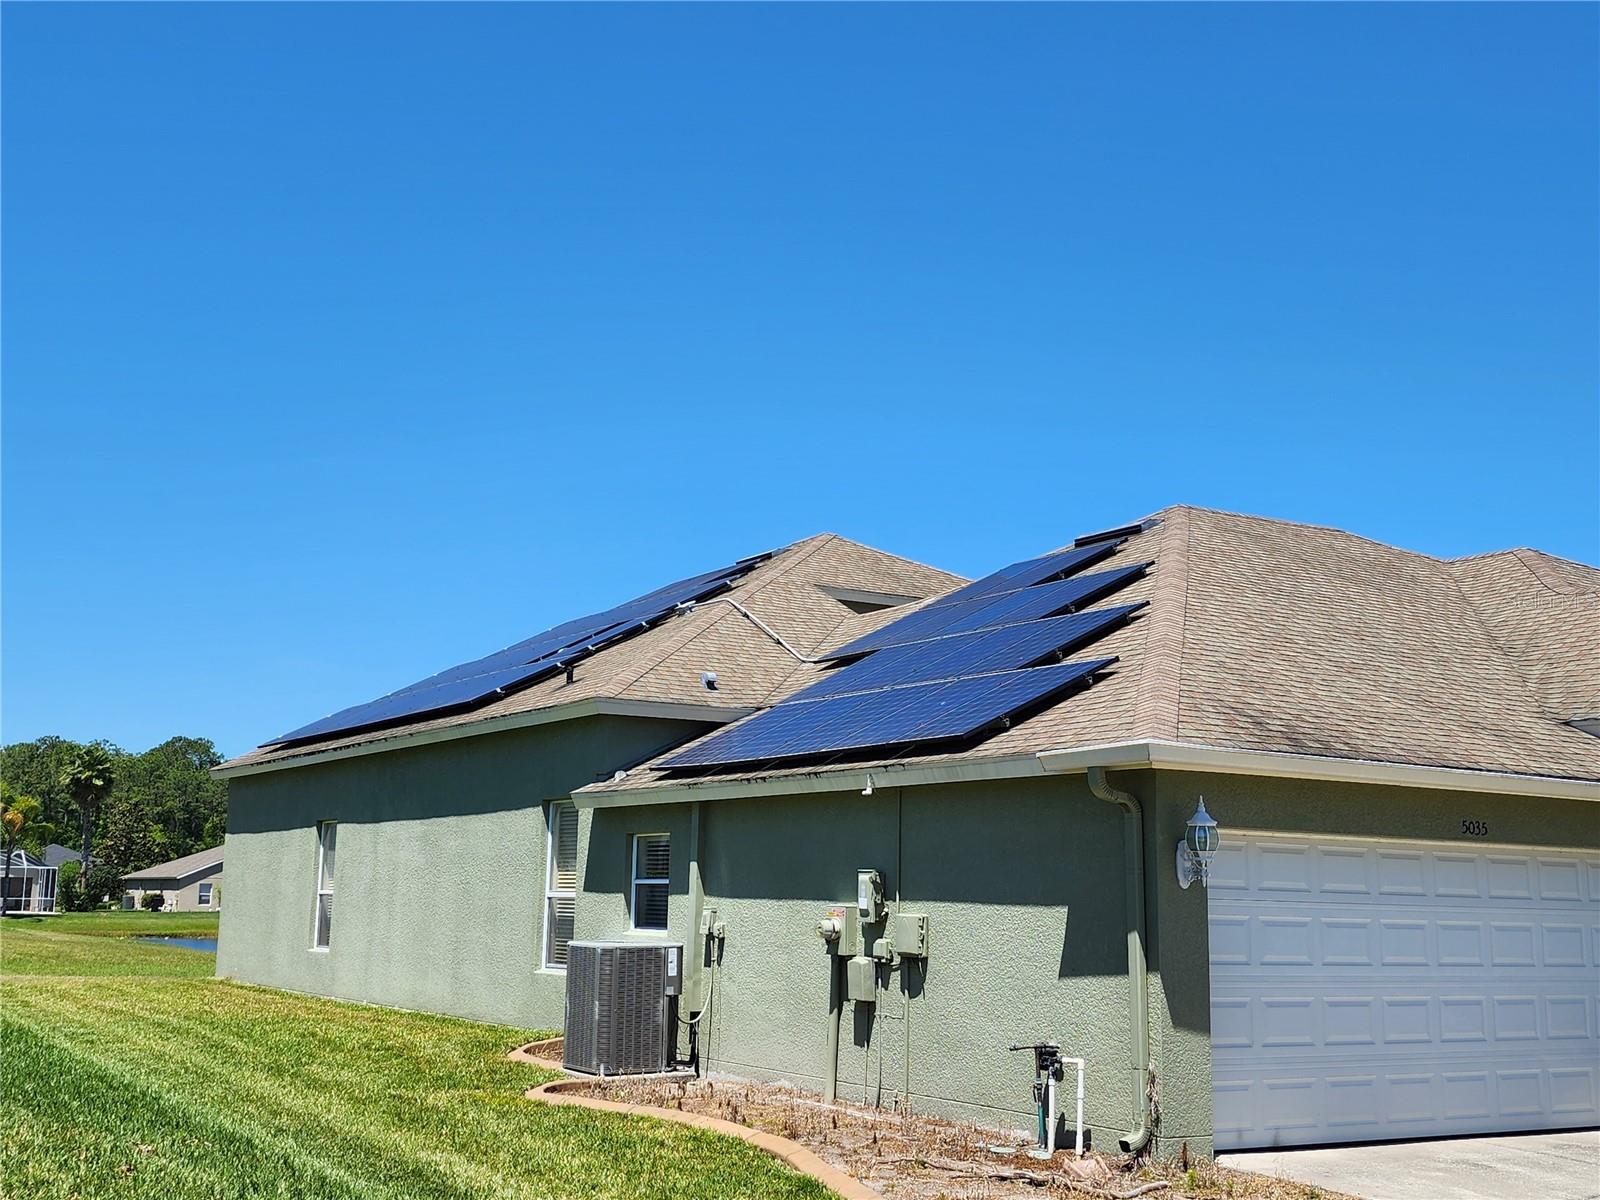 South Side - Solar Panels